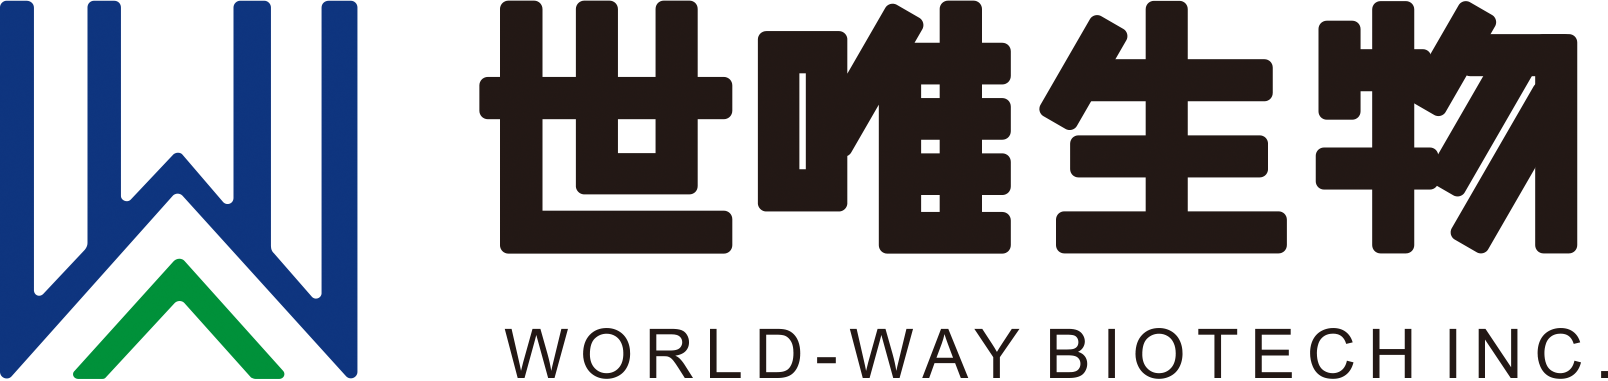 World-way-Biotech-Inc.